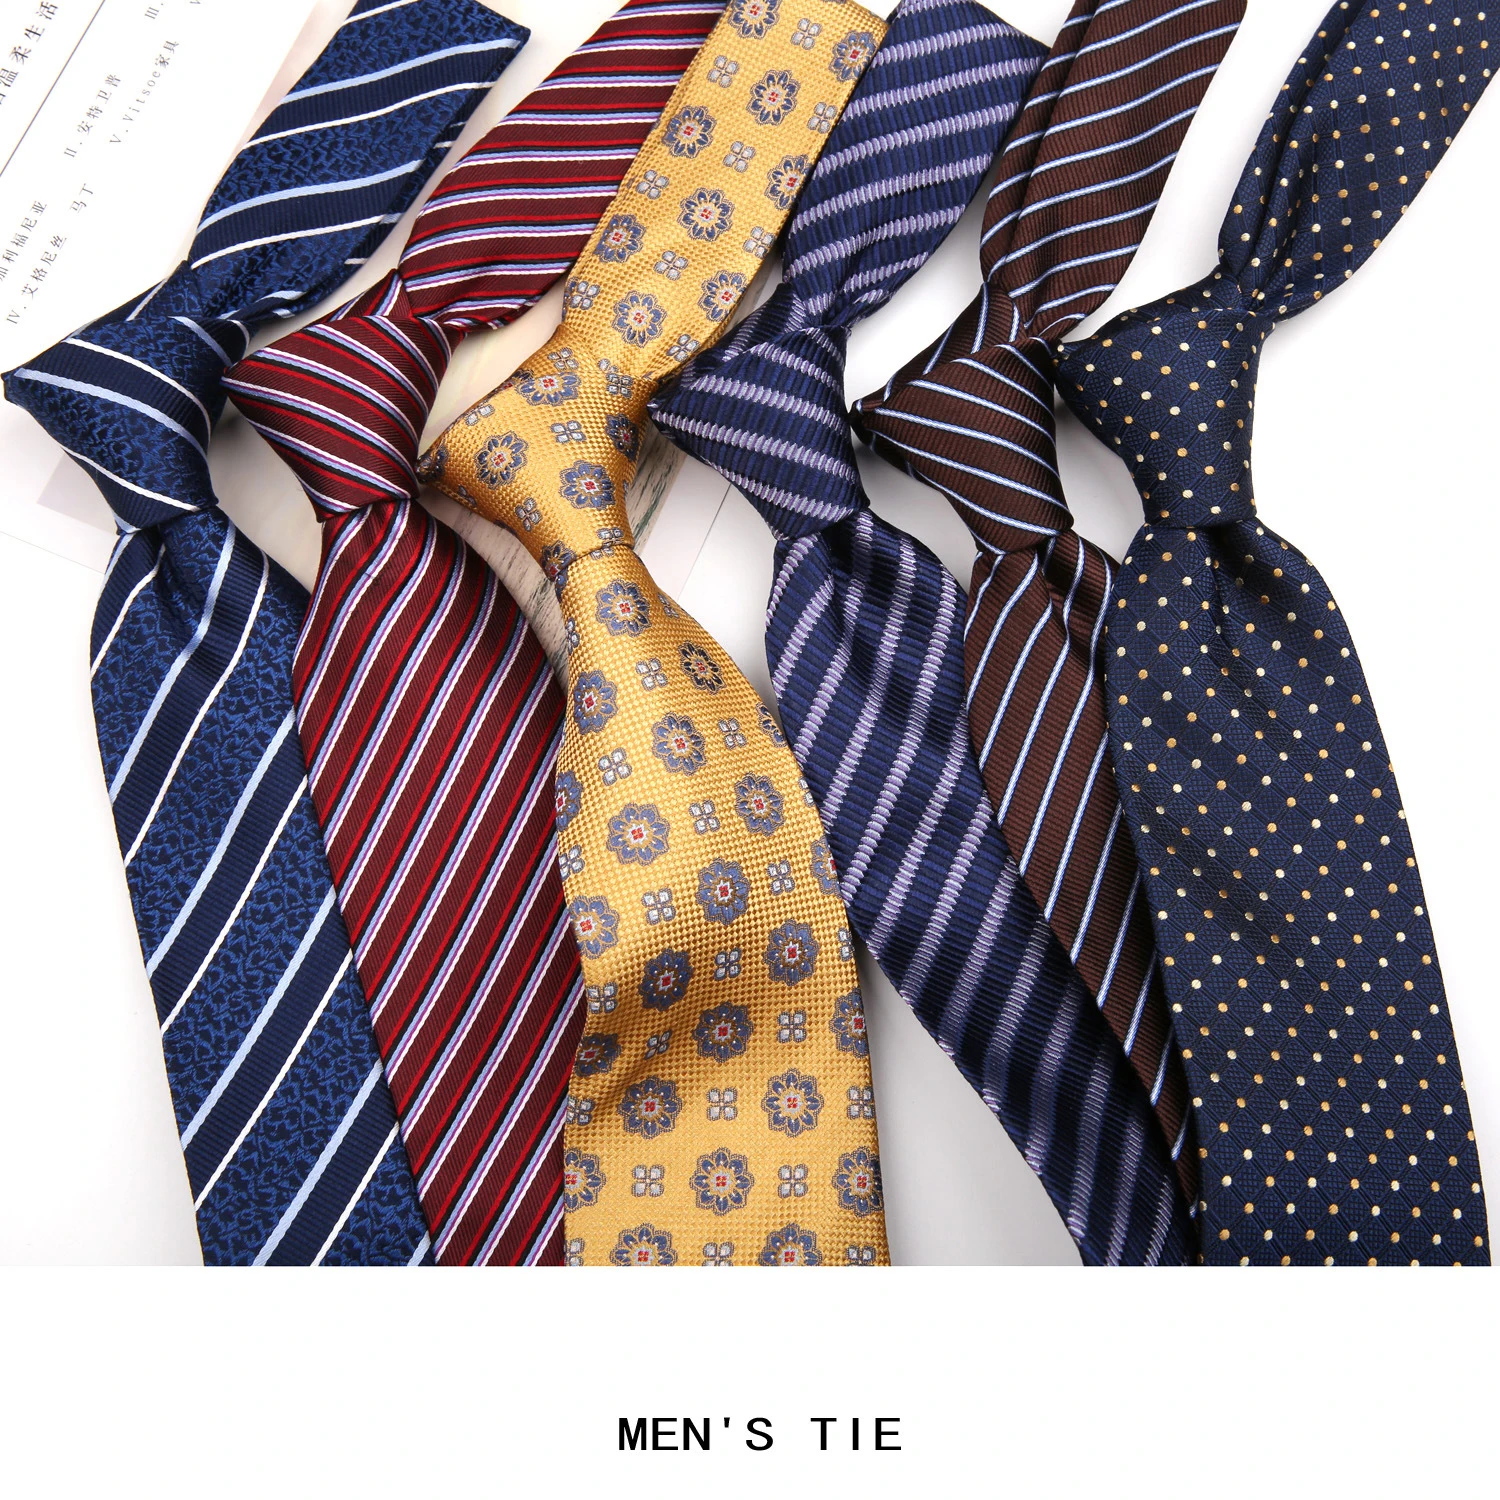 

8cm Adult Silk Neckties for Mens Suits Wedding Neck Ties Retro Striped Corbatas Gravata Neckwear Gentleman Gravatas Tie